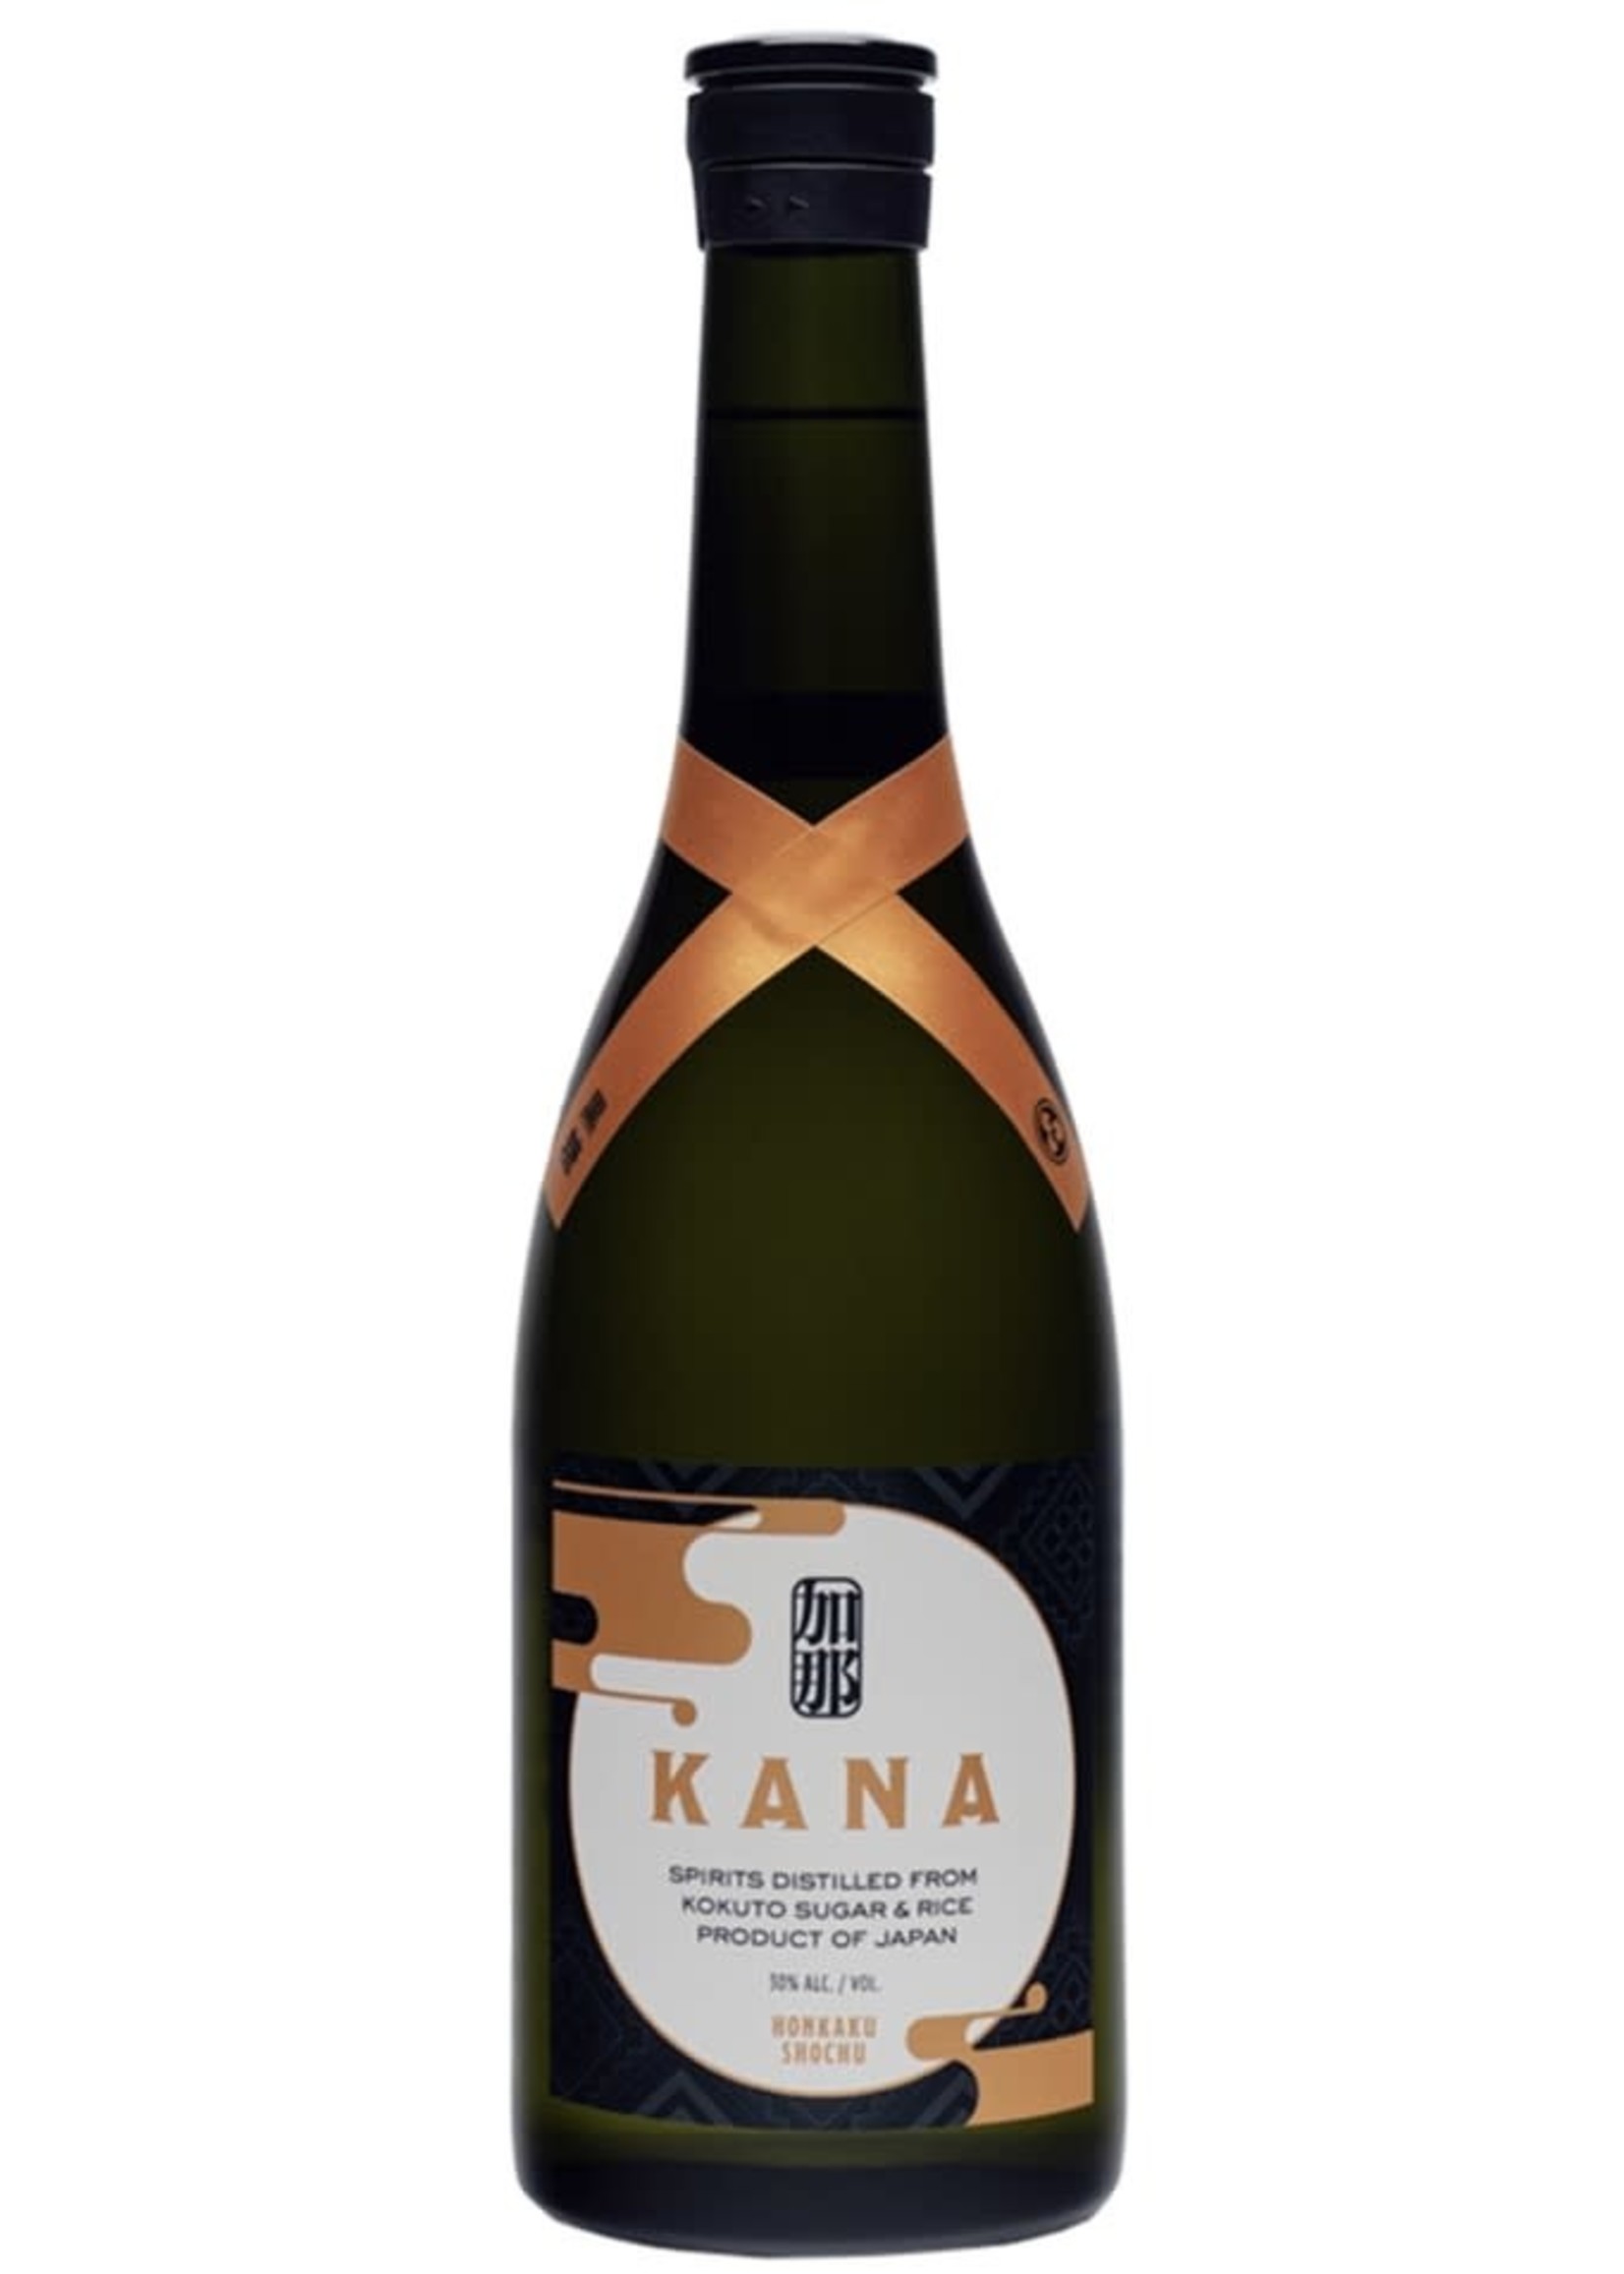 Kana Kana / Honkaku Shochu Spirit Distilled From Sugar & Rice 30% abv / 750mL